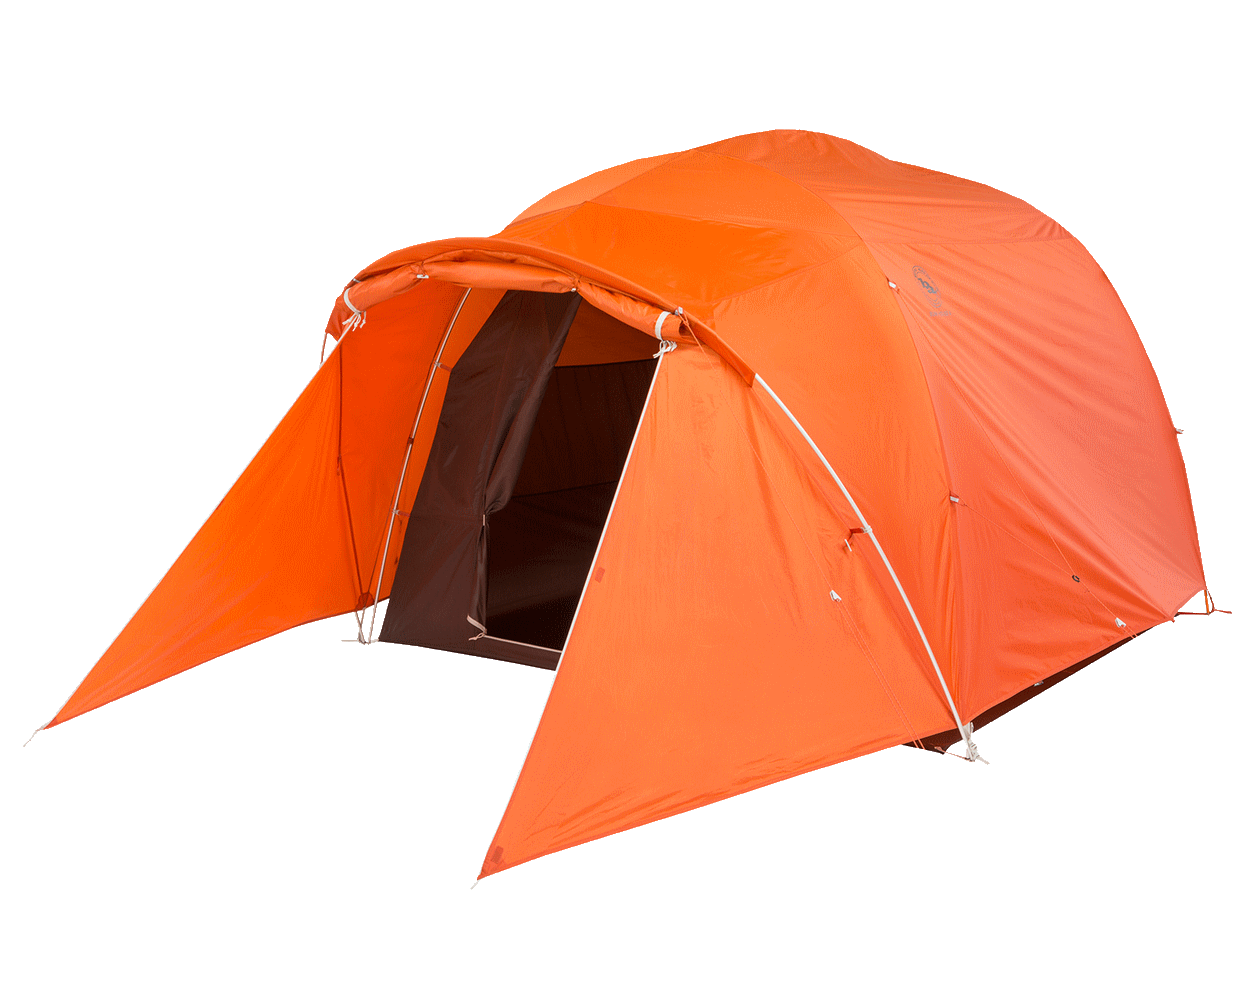 Insulated Tent Comforter